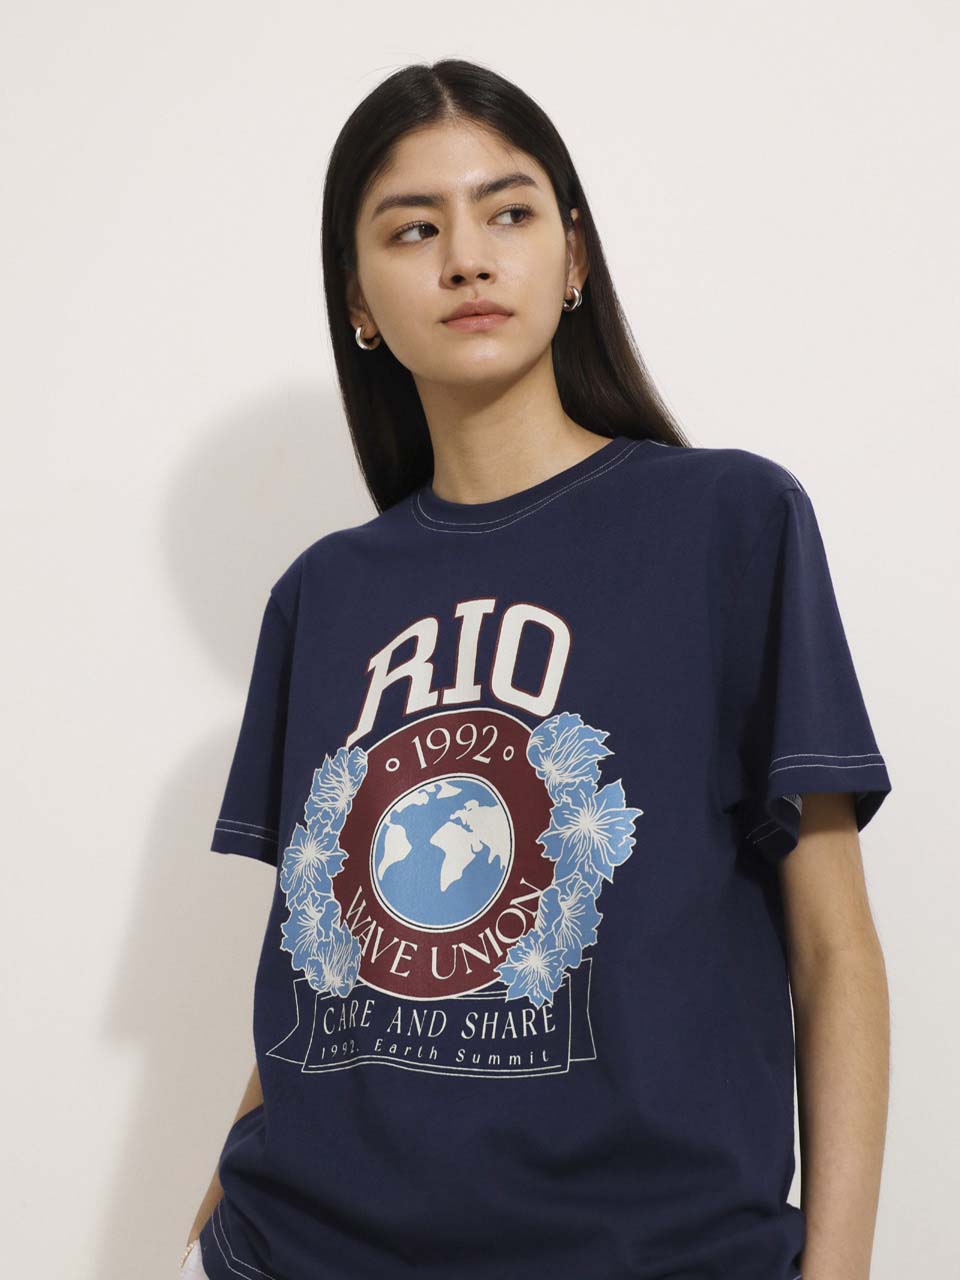 Rio Short sleeve T-shirt navy